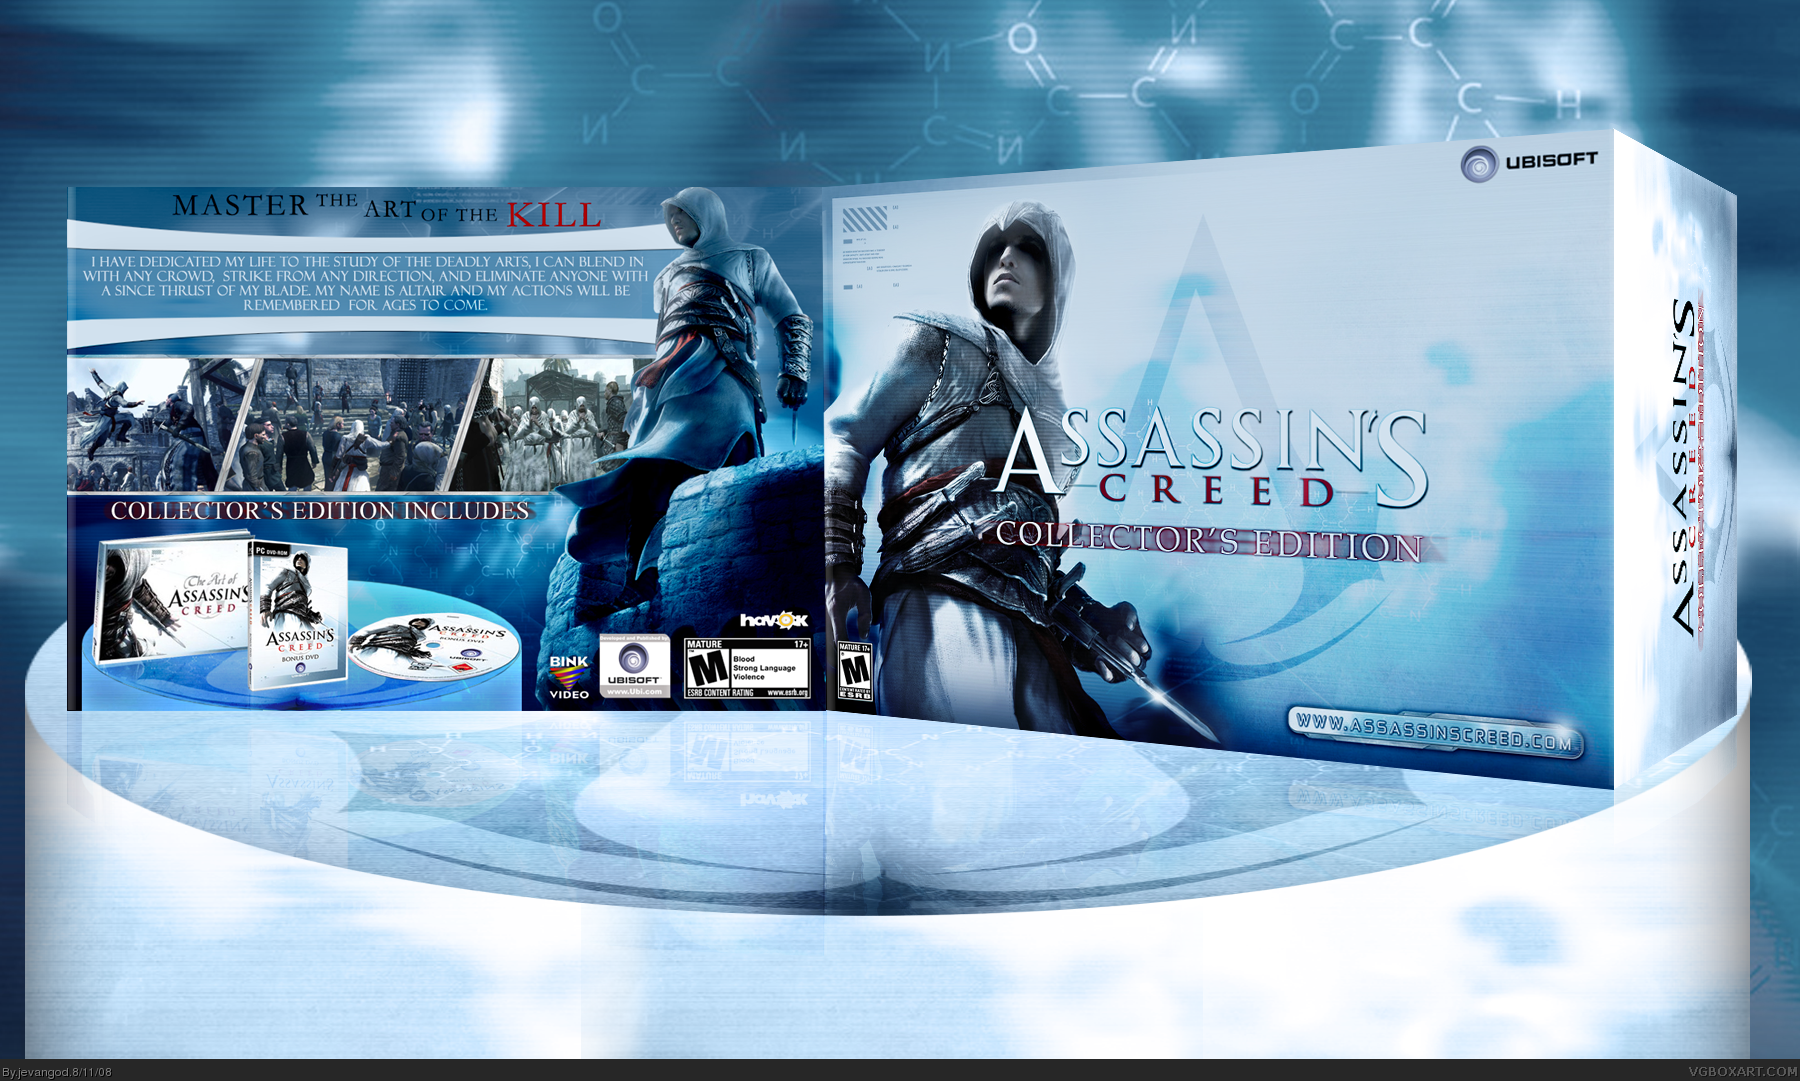 Assassin's Creed Collectors Edition box cover